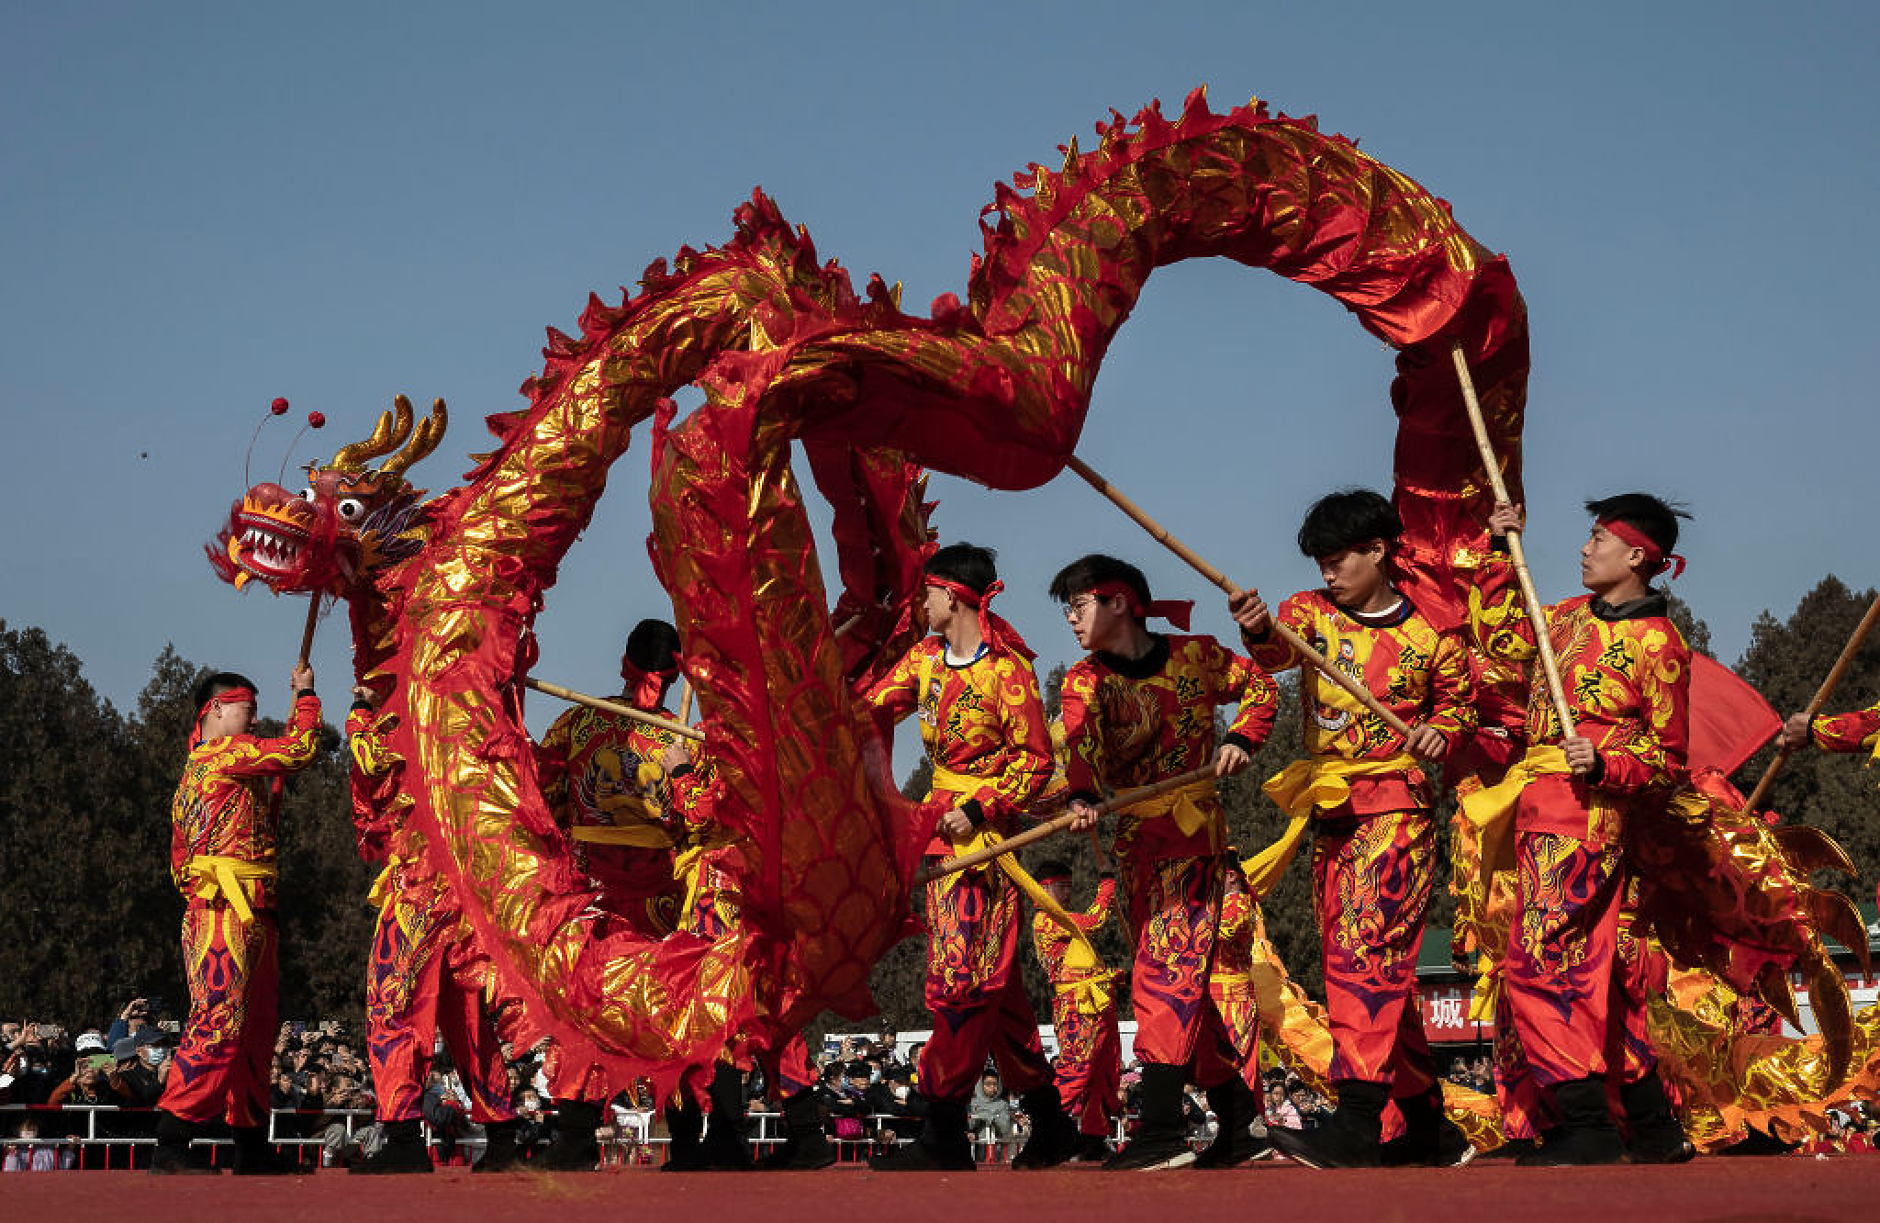 Китай очаква „драконов“ бейби бум през тази година